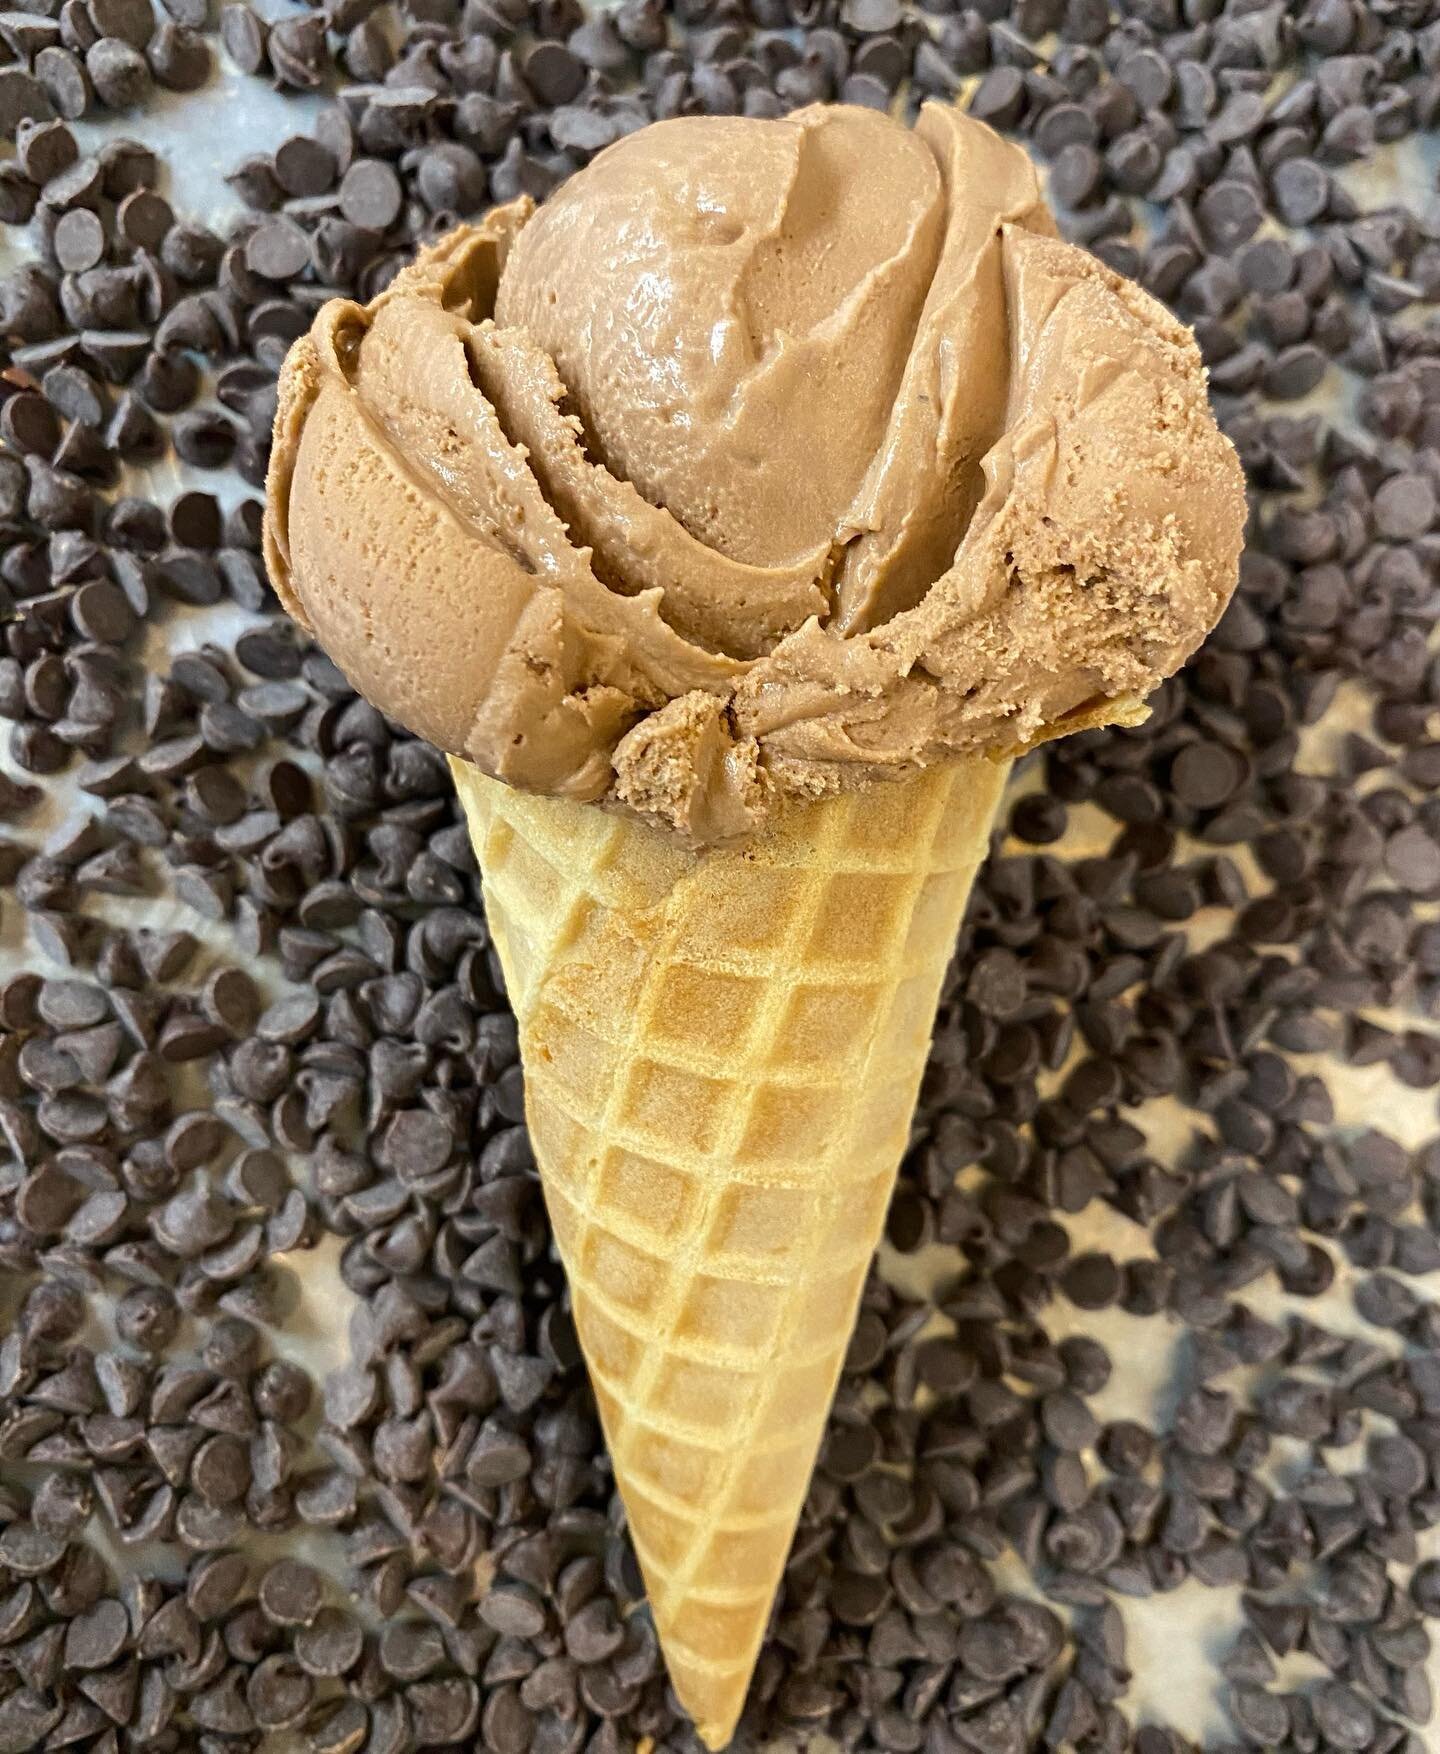 Homemade chocolate ice cream? Yes please! 🍦🤎

#fredericksburg #goodeats #icecream #abnerb #hotcoca #fxbg #coffee #carolinestreet #staffordeats #staffordcounty #shopsmall #smallbusiness #mainstreet #yummy #chocolate #shoplocal